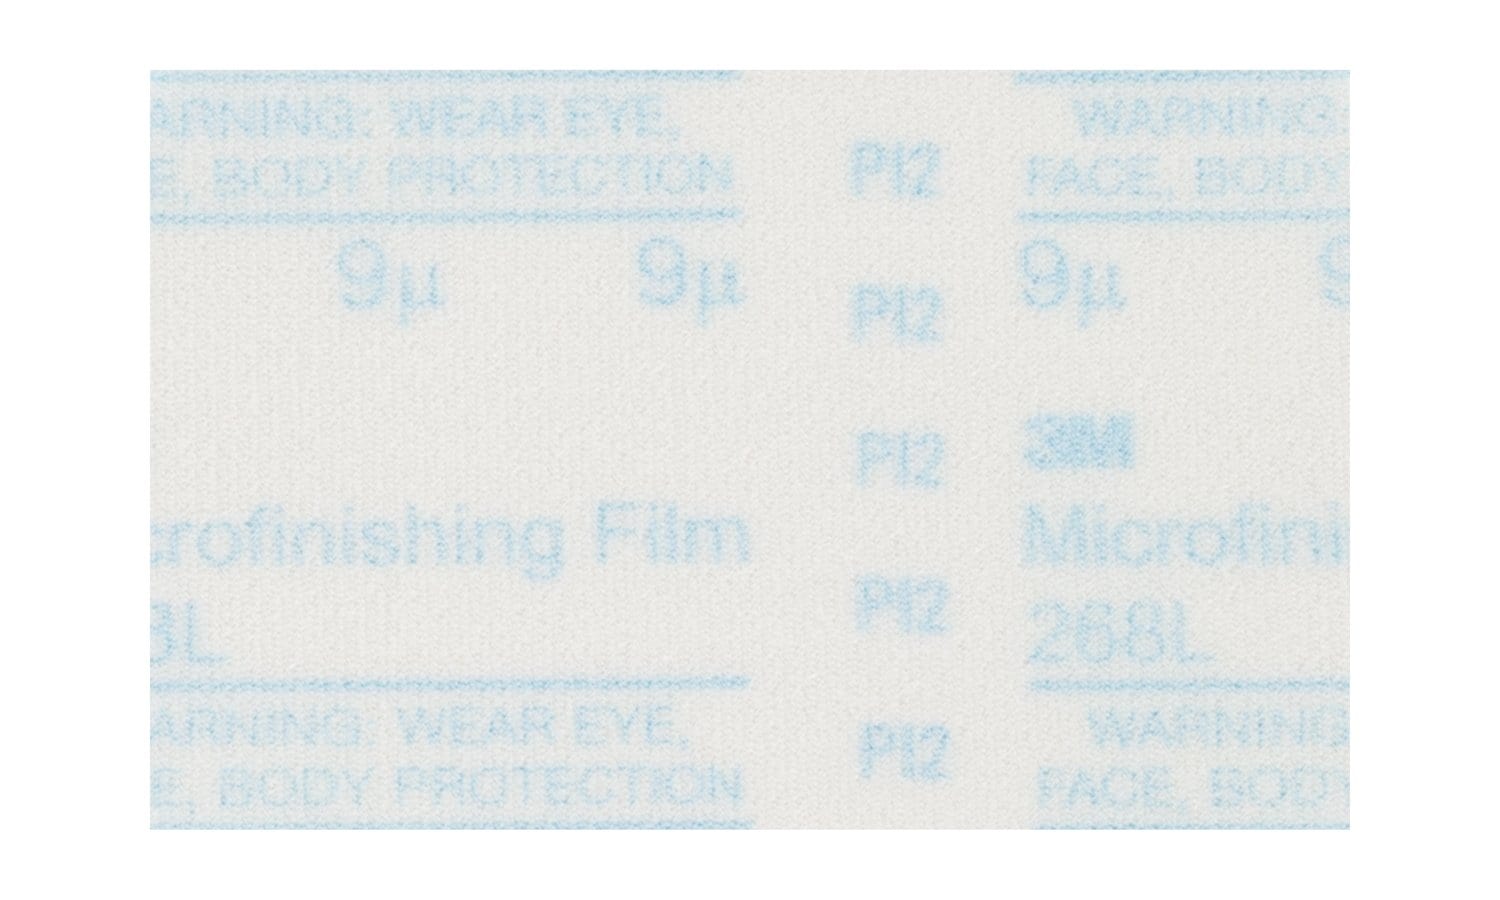 7010363767 - 3M Microfinishing PSA Film Disc 268L, 9 Mic 3MIL, Type D, 6 in x NH,
Die 600Z, 25/Carton, 250 ea/Case